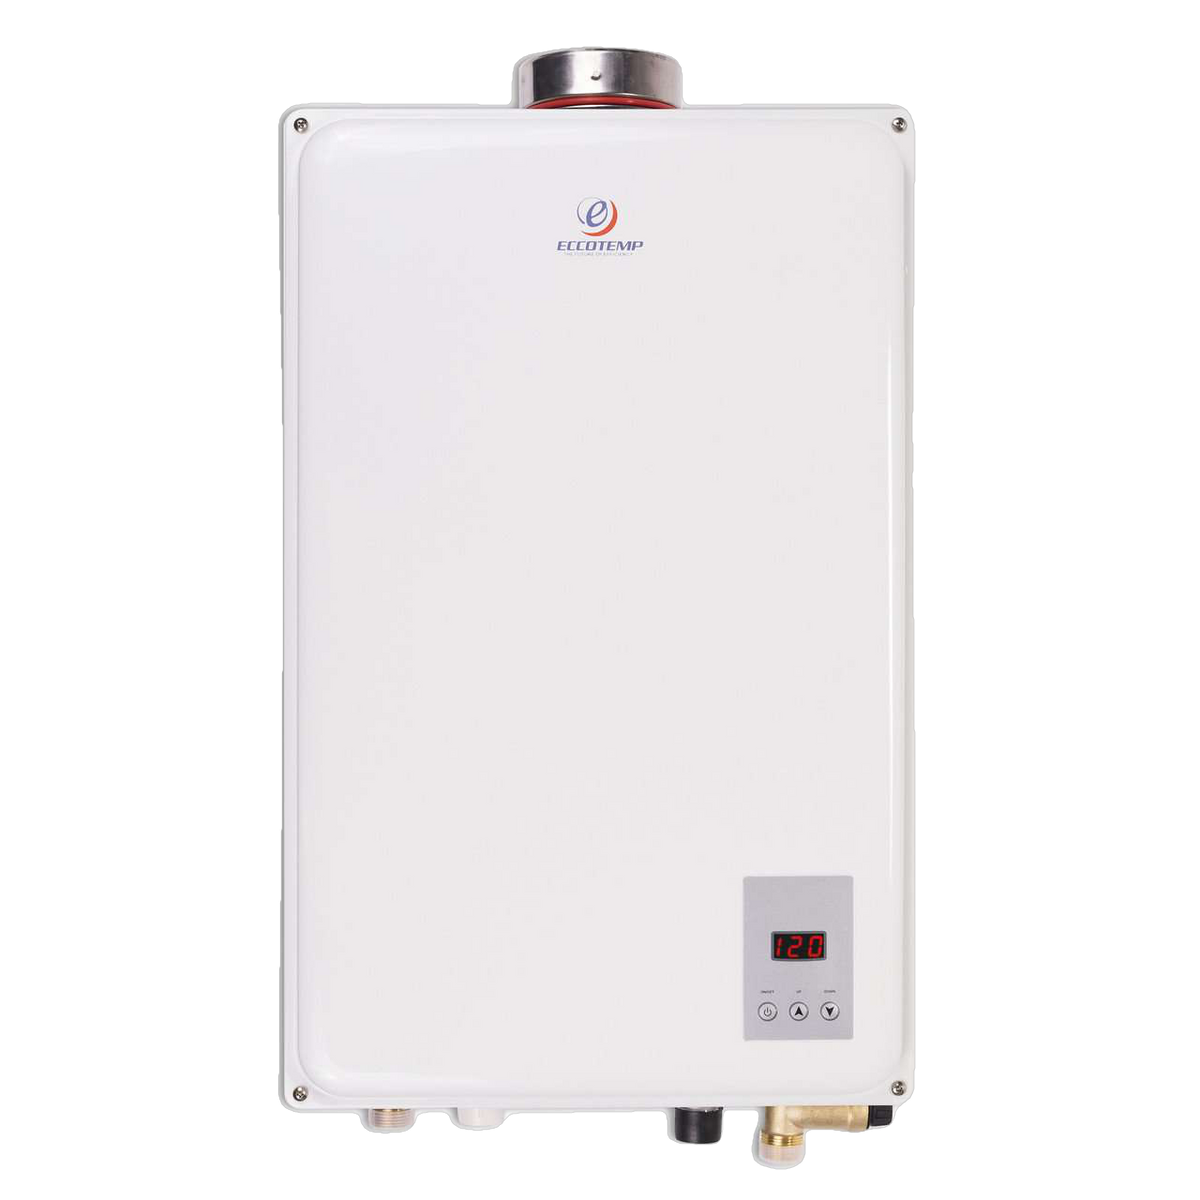 Eccotemp 45HI-NG 6.8 GPM Natural Gas Tankless Water Heater Manufacturer RFB